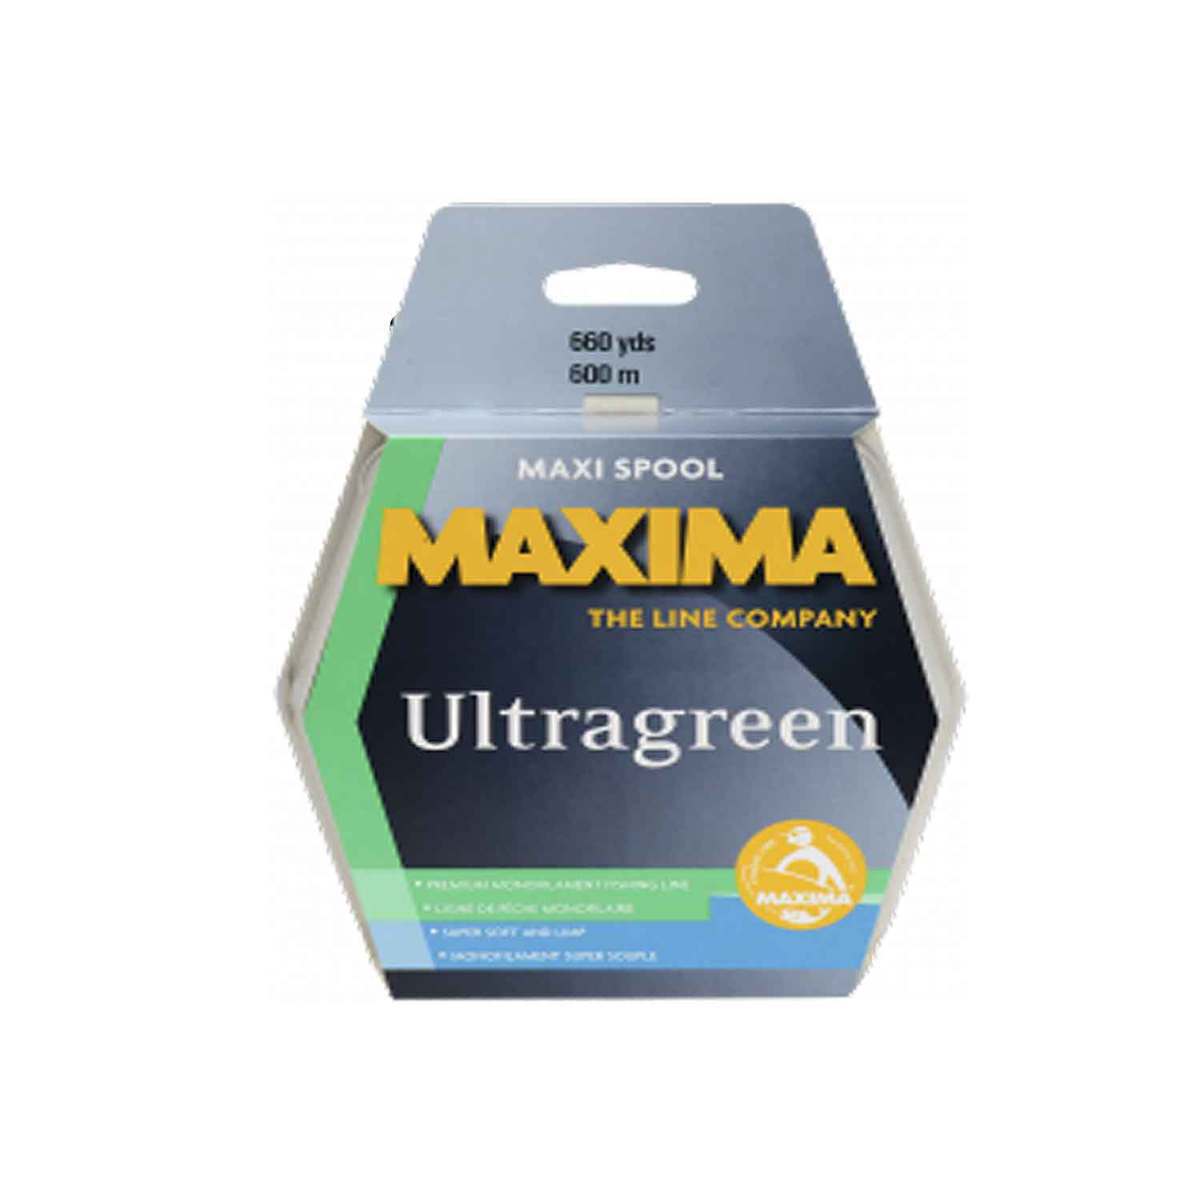 Maxima Fishing Line Maxi Spools, Ultragreen